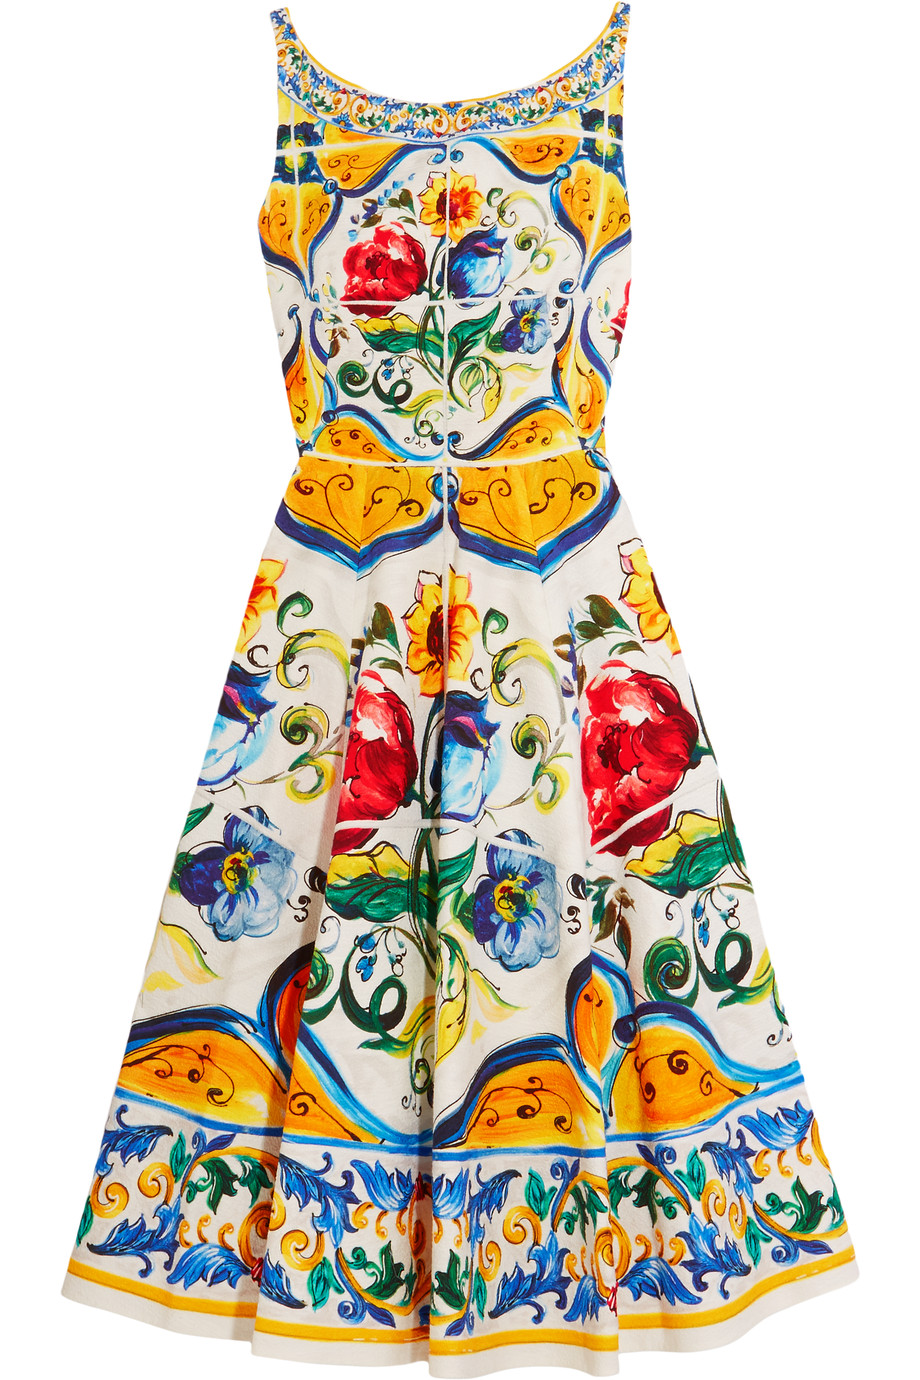 dolce and gabbana print dress